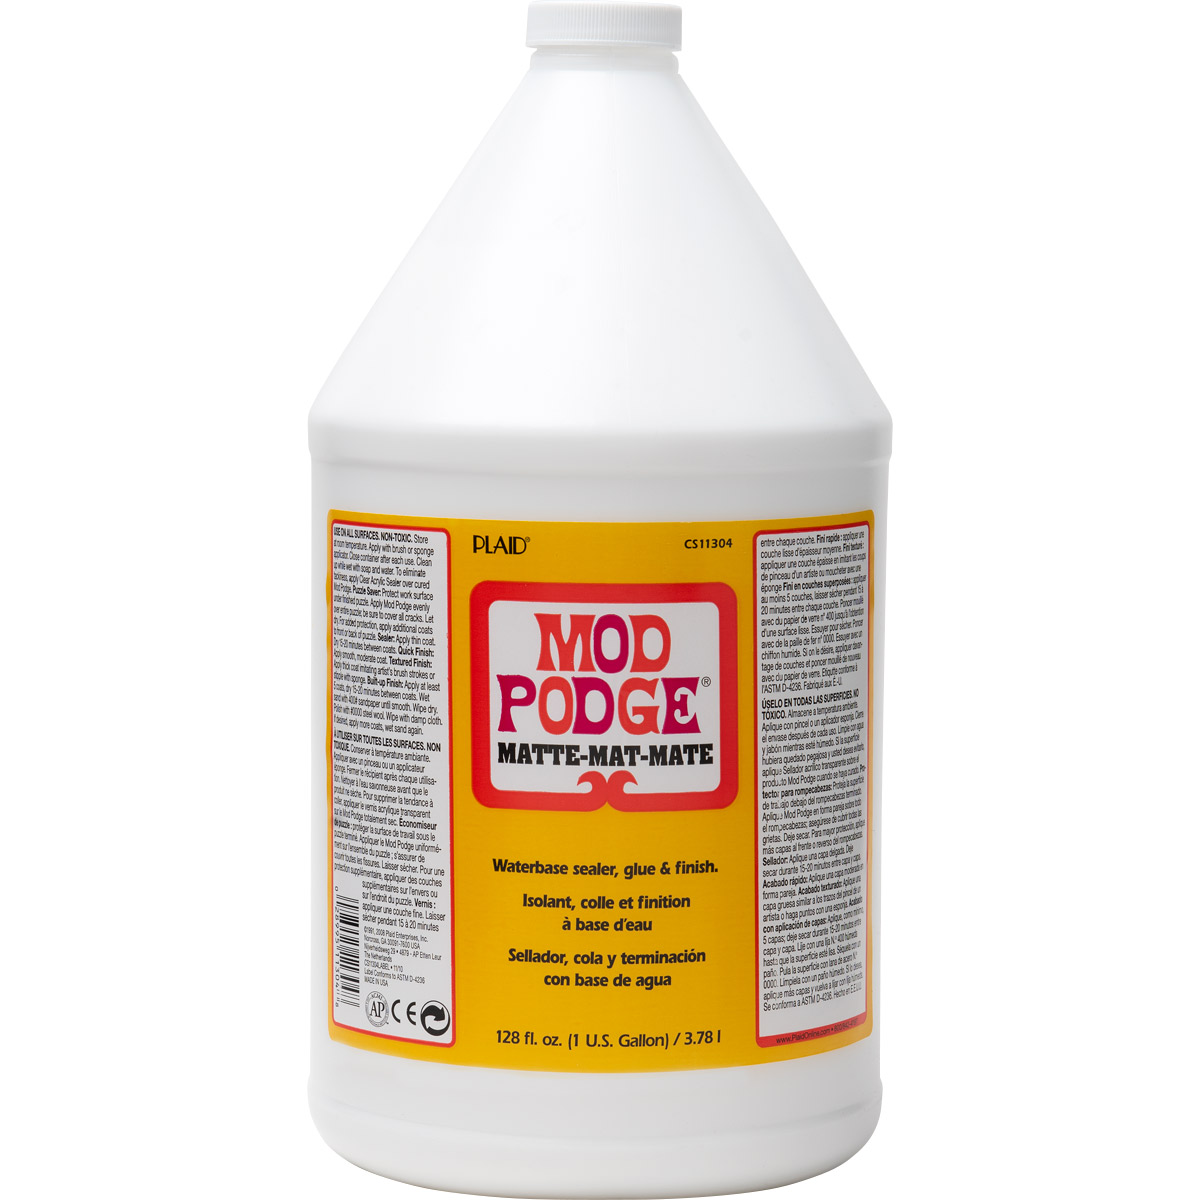  Mod Podge CS11303 Waterbase Sealer, Glue and Finish